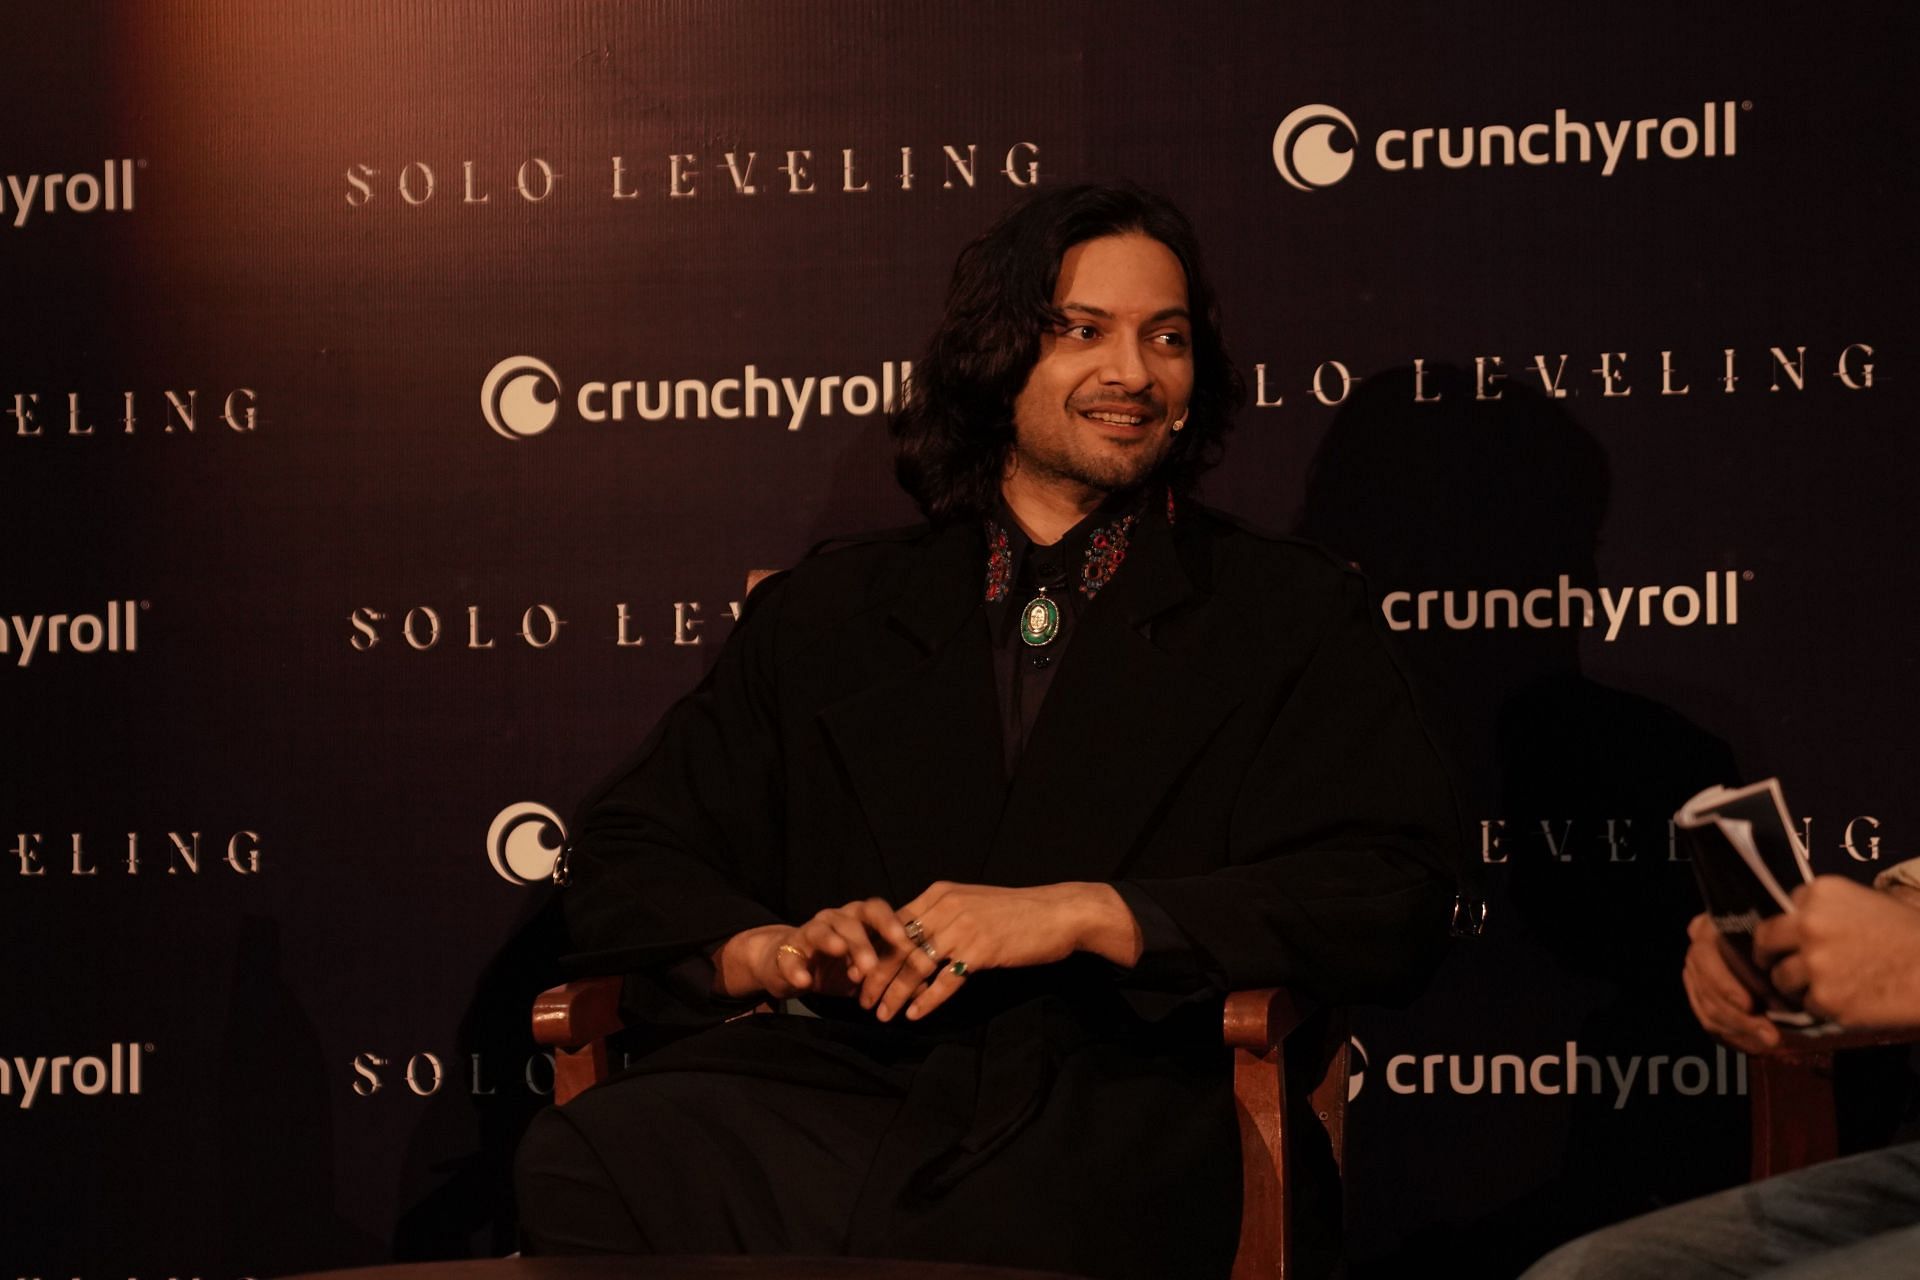 Ali Fazal at the Solo Leveling premiere in Mumbai (Image via Crunchyroll)